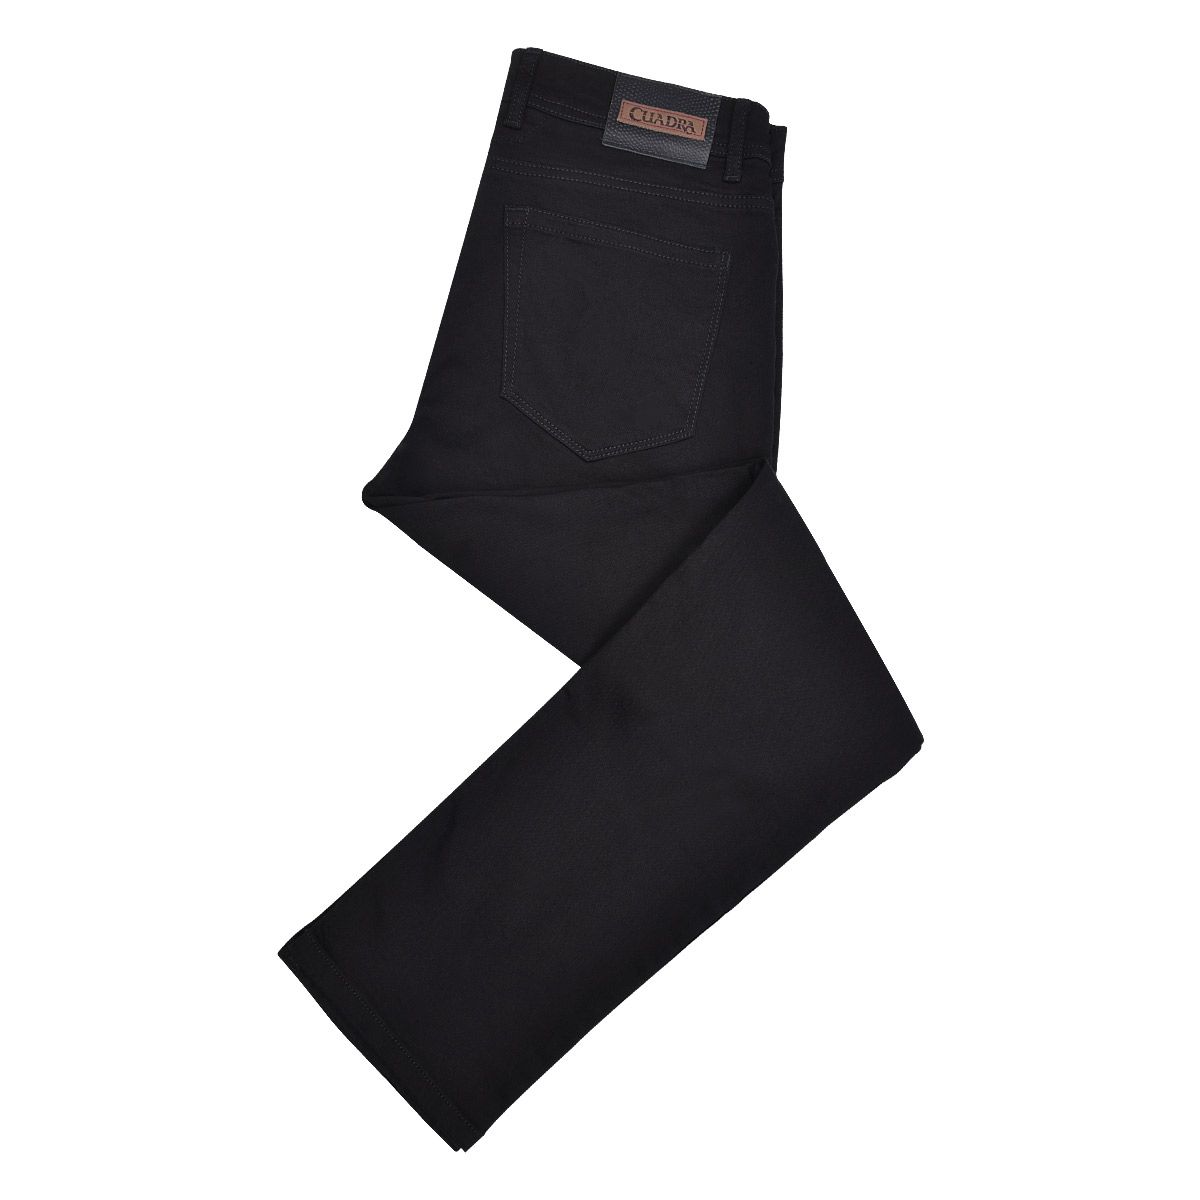 JN0LP20 - Cuadra denim black ultimate comfort stretch denim jeans for men-Kuet.us